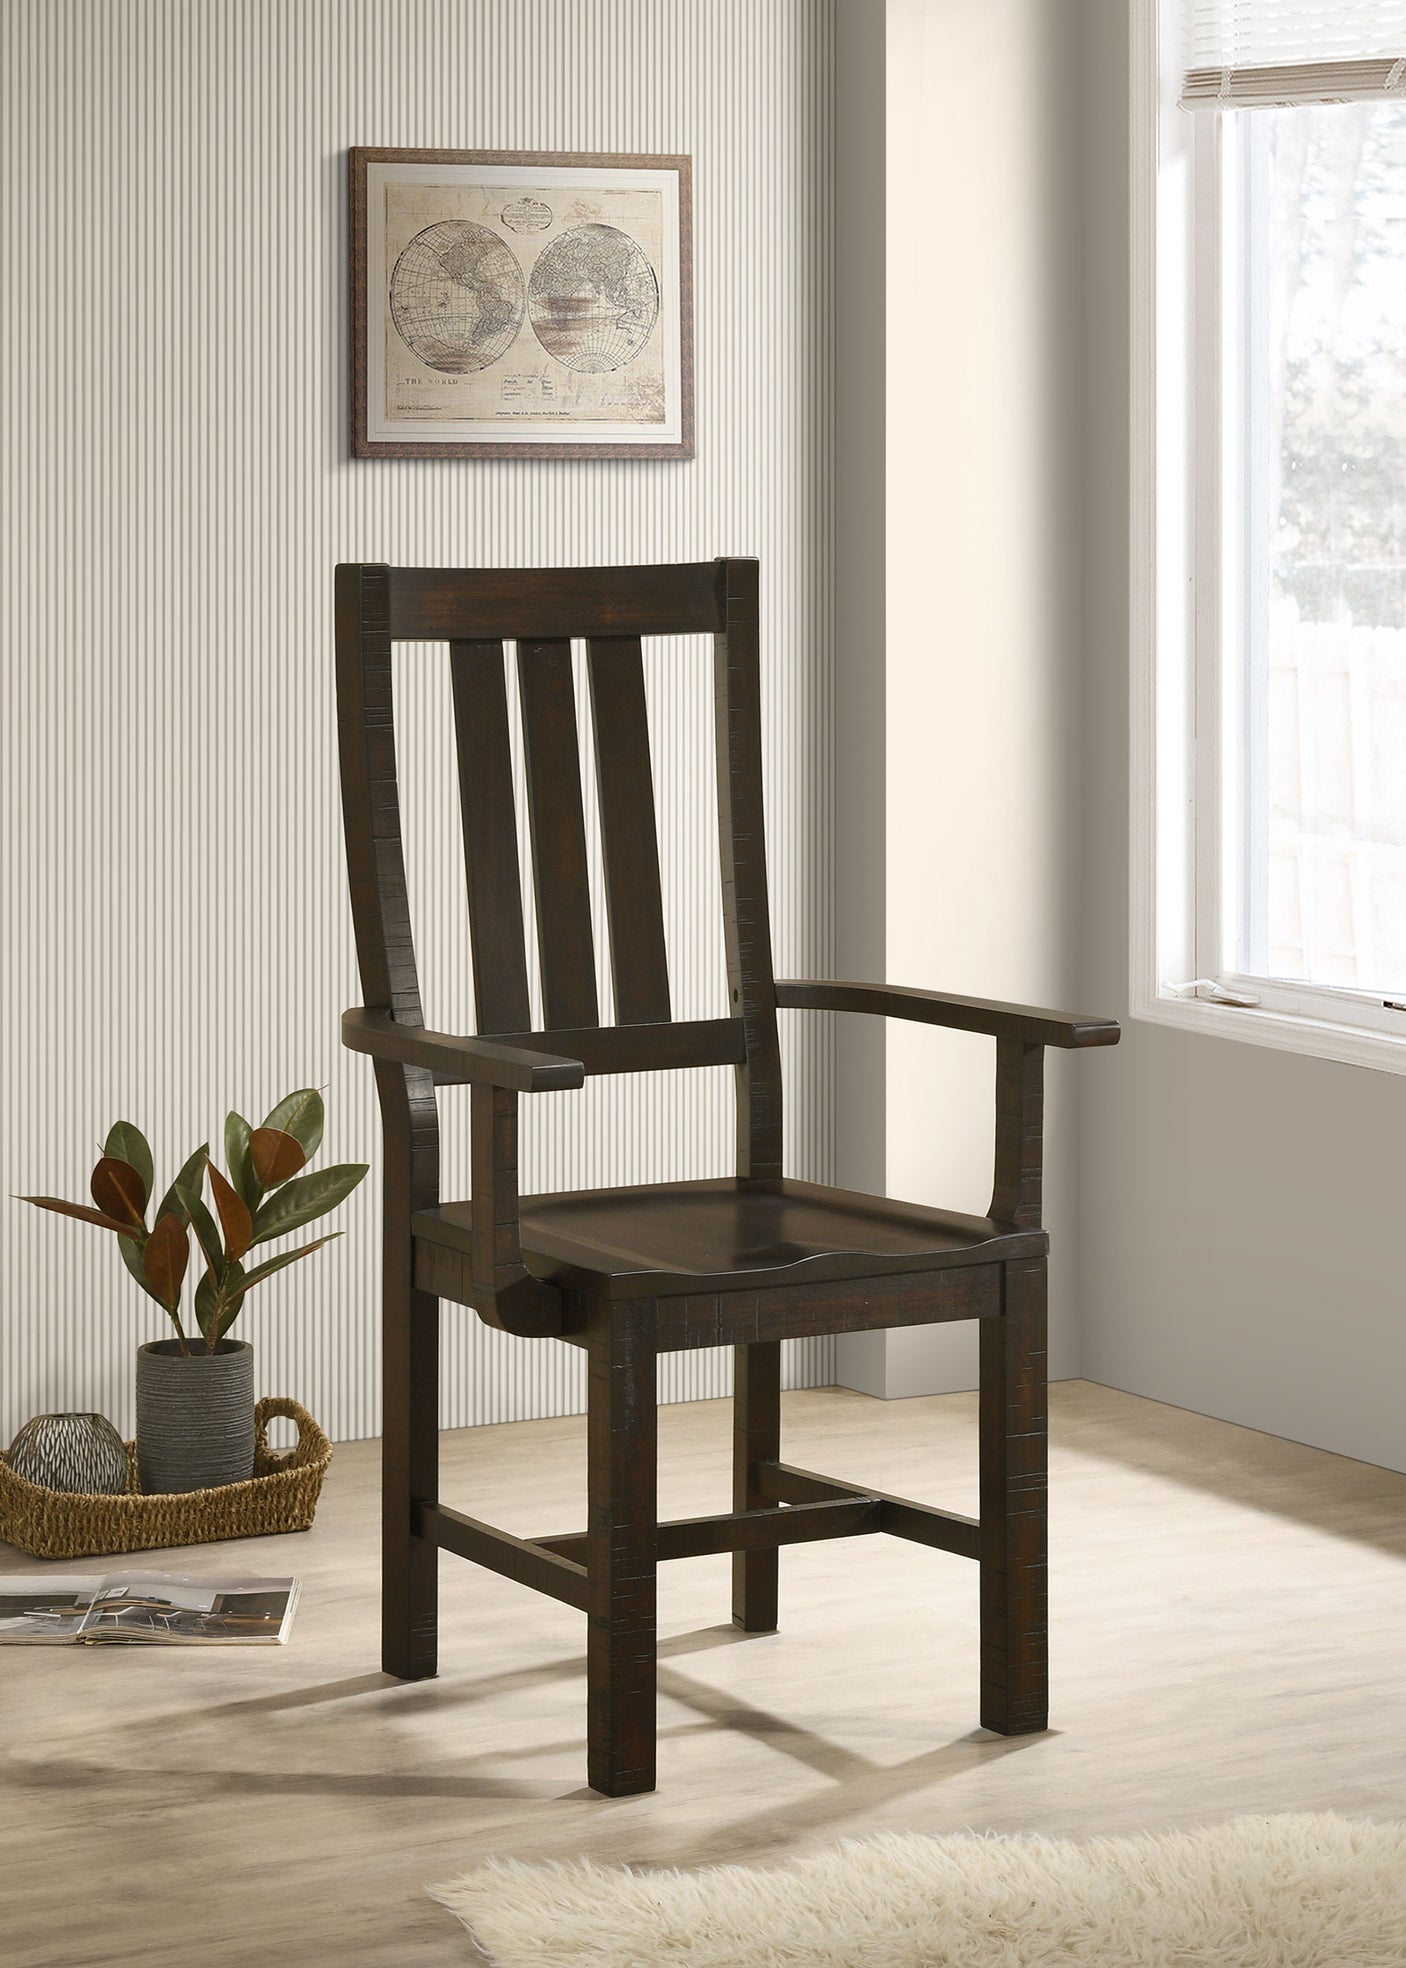 Arm Chair - Calandra Slat Back Arm Chairs Vintage Java (Set of 2)